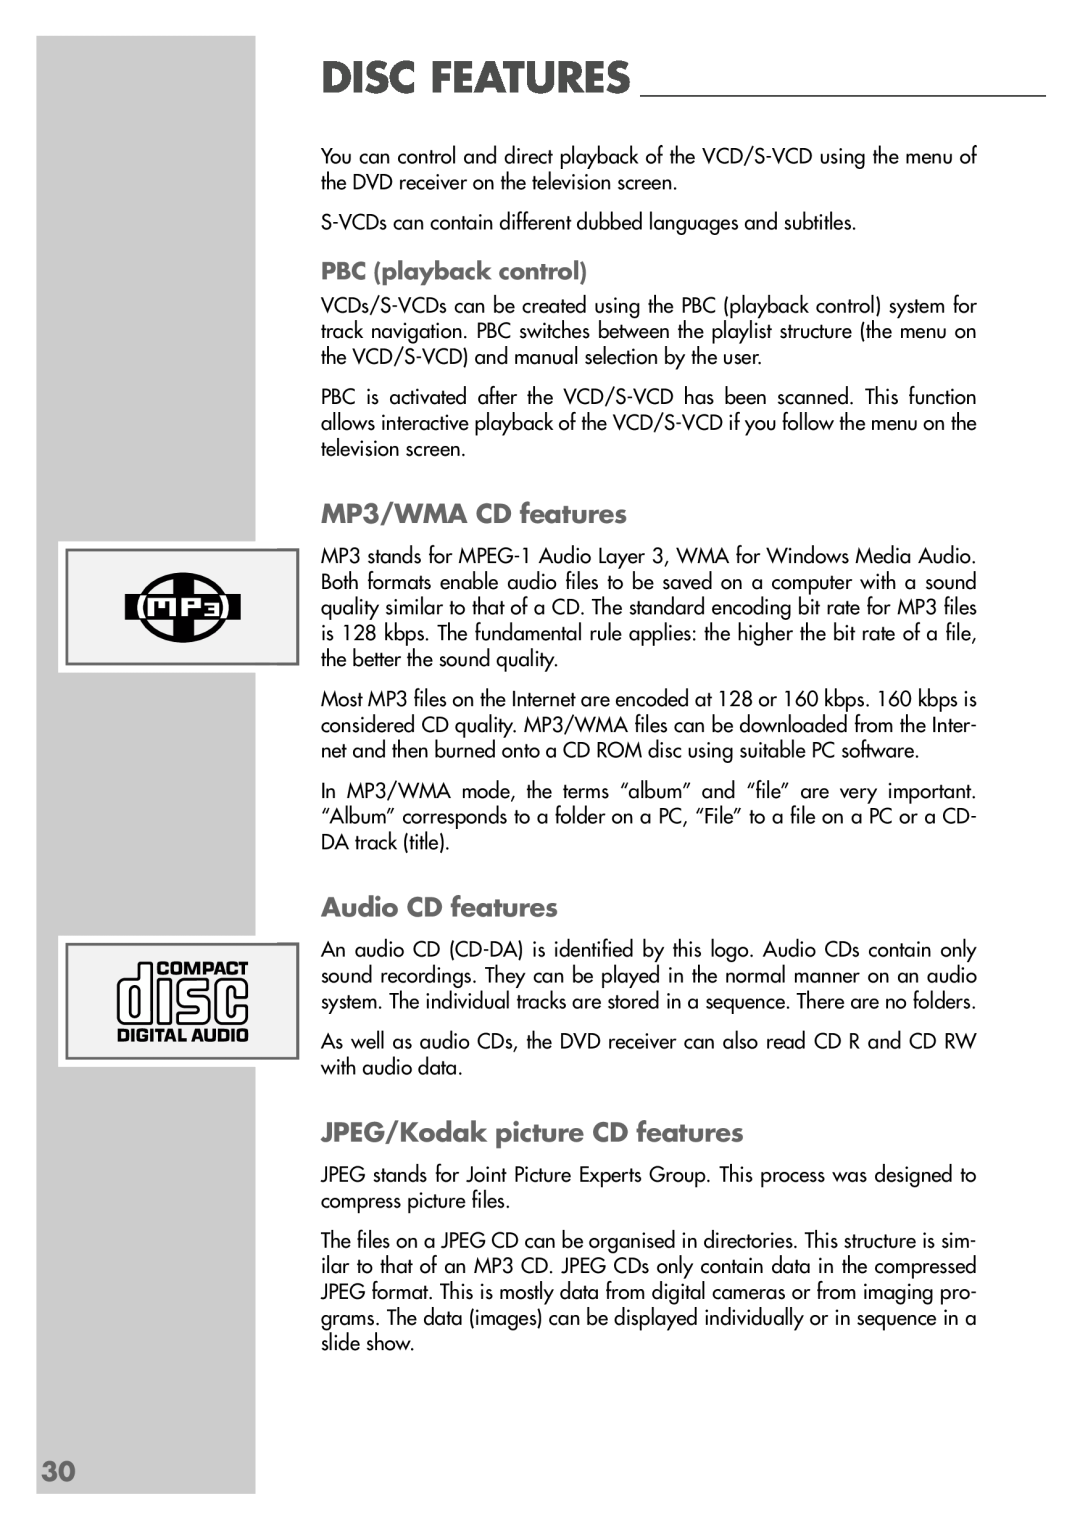 Grundig DR 3400 DD manual MP3/WMA CD features, Audio CD features, JPEG/Kodak picture CD features, PBC playback control 